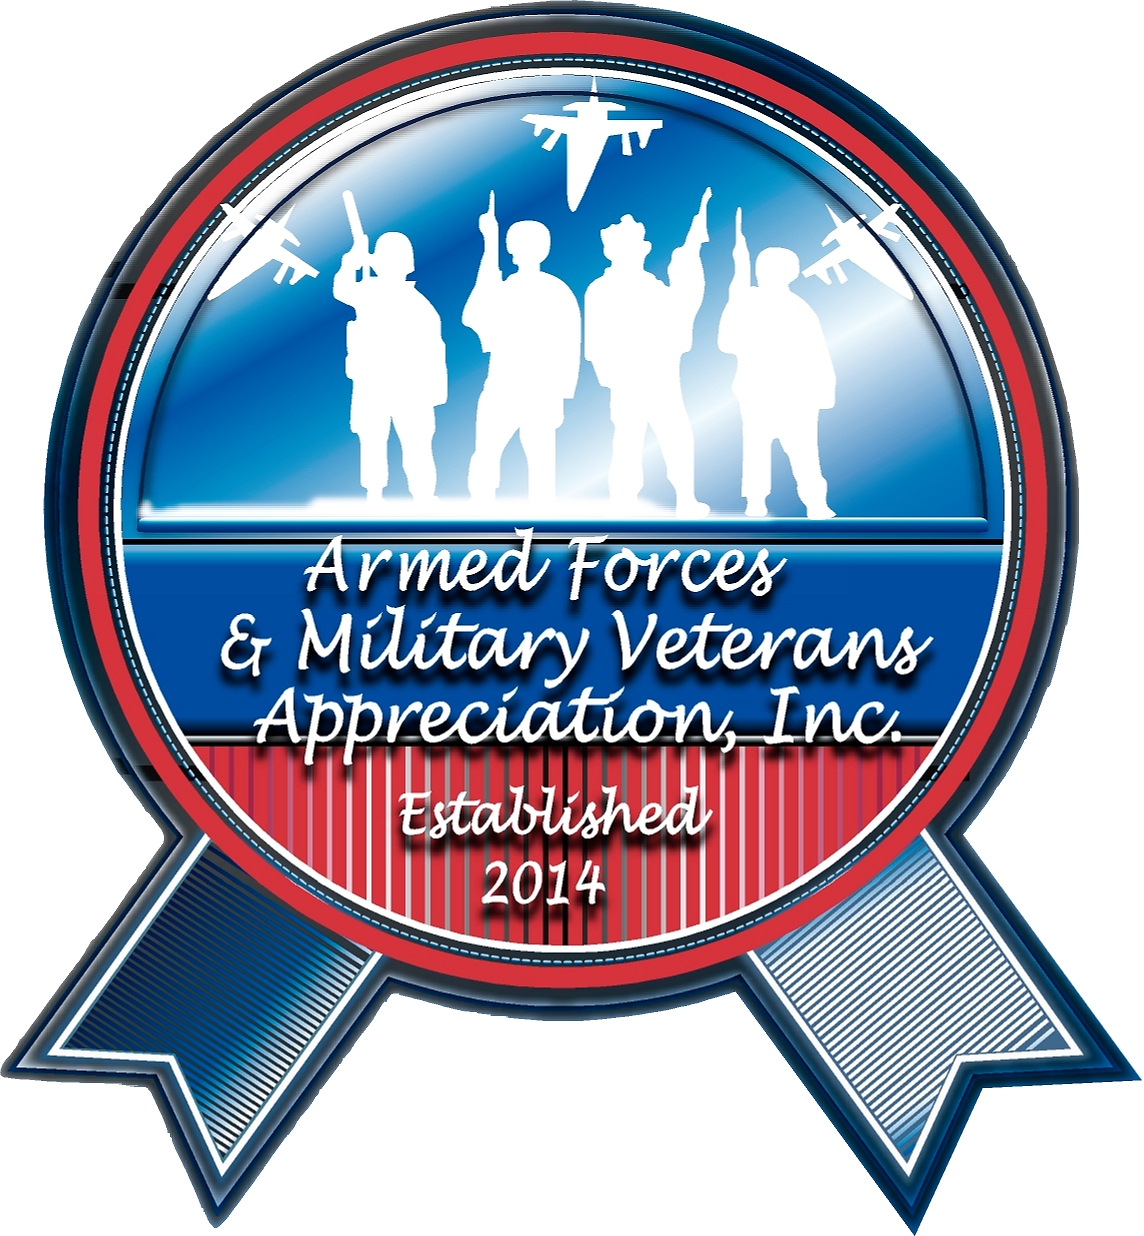 Armed Forces & Military Veterans Appreciation Inc. logo